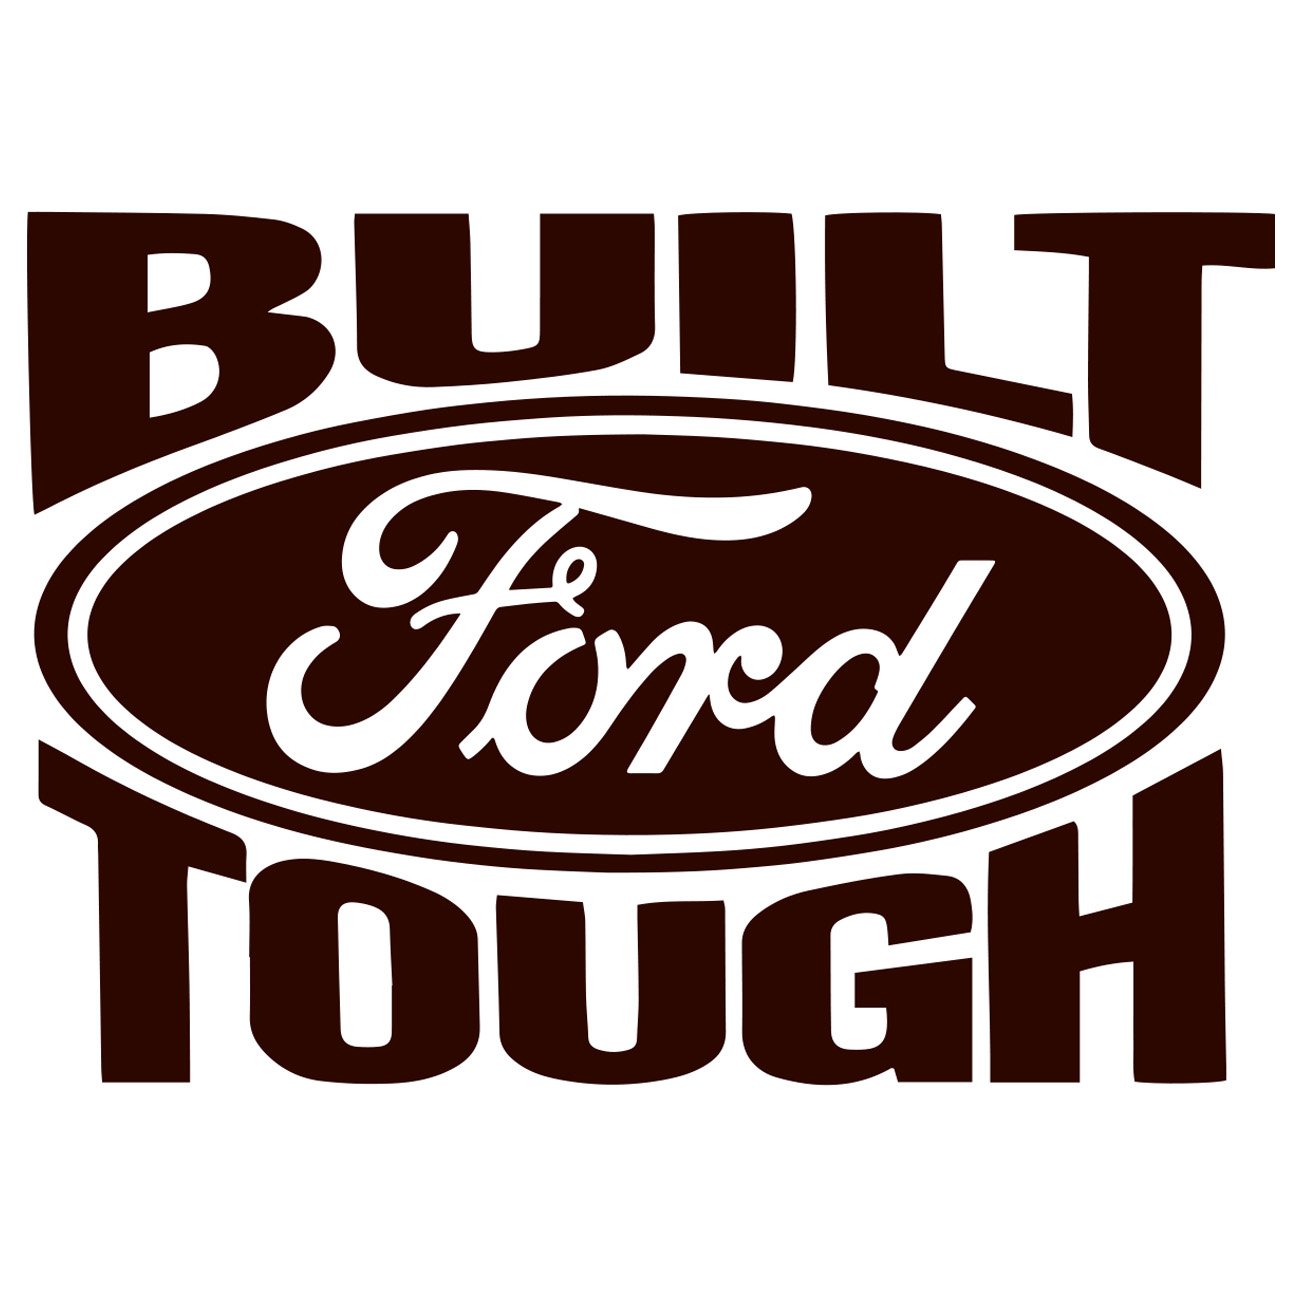 Built tough Ford